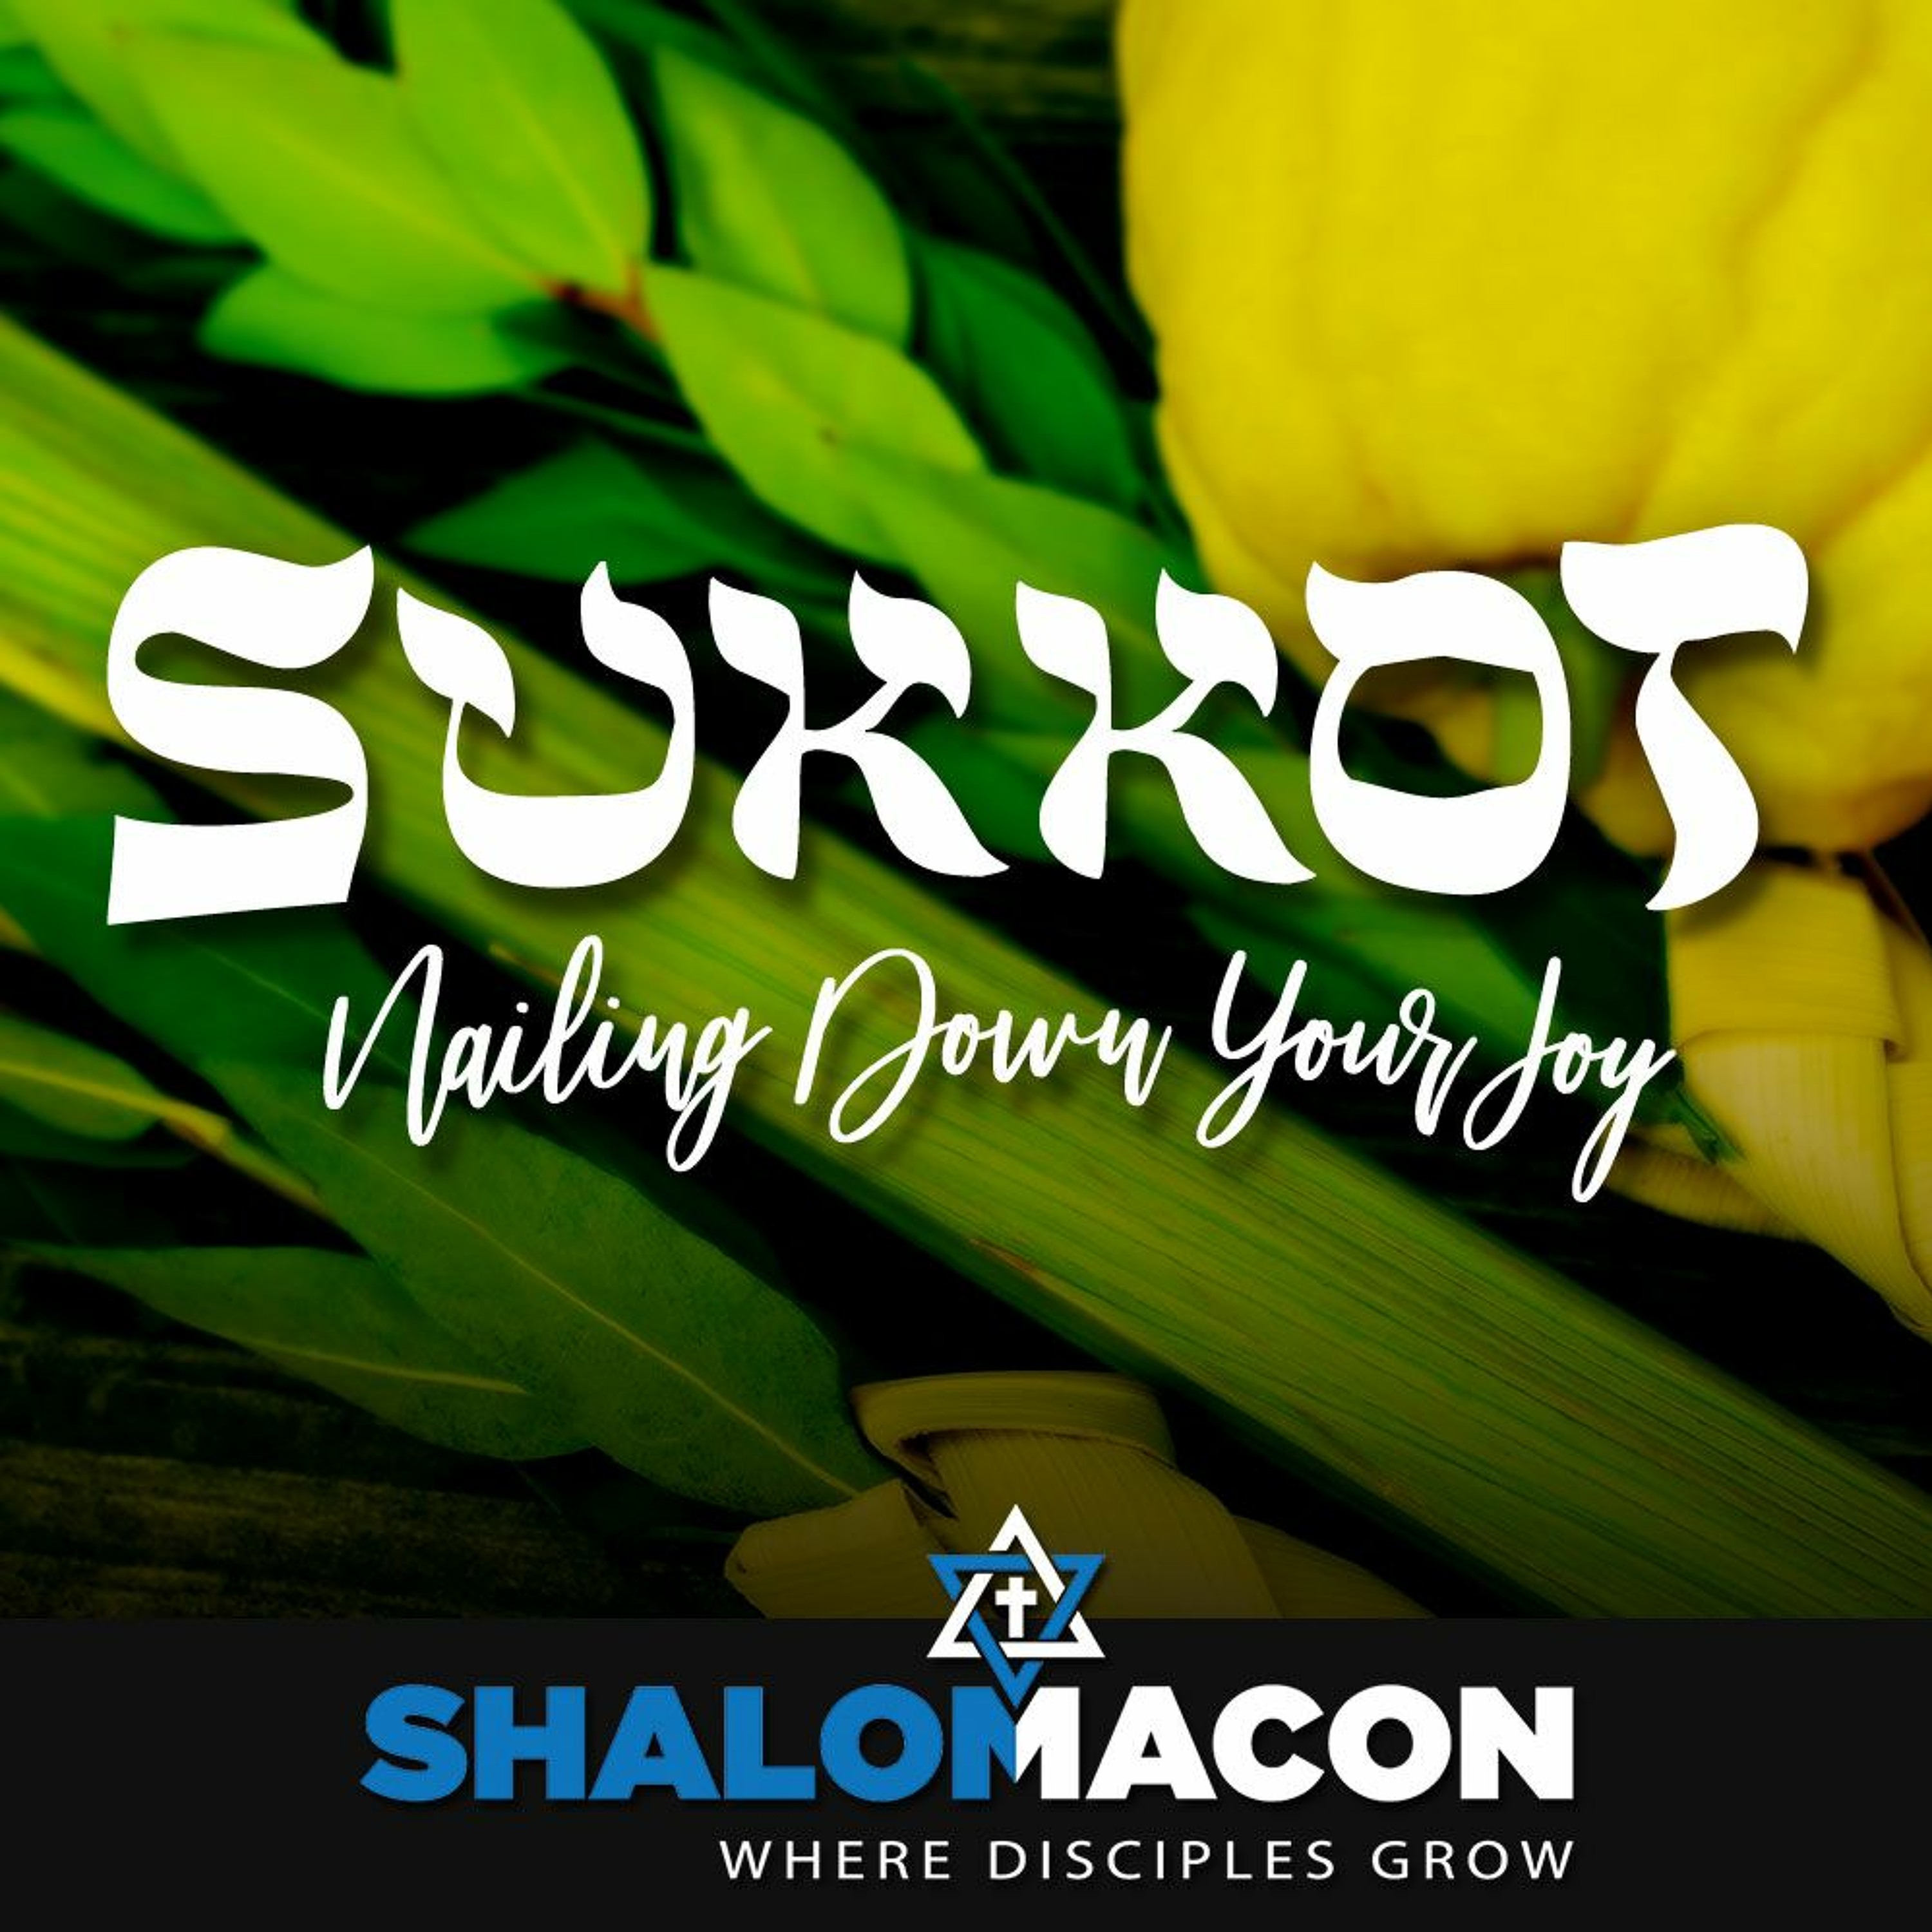 Sukkot - Nailing Down Your Joy